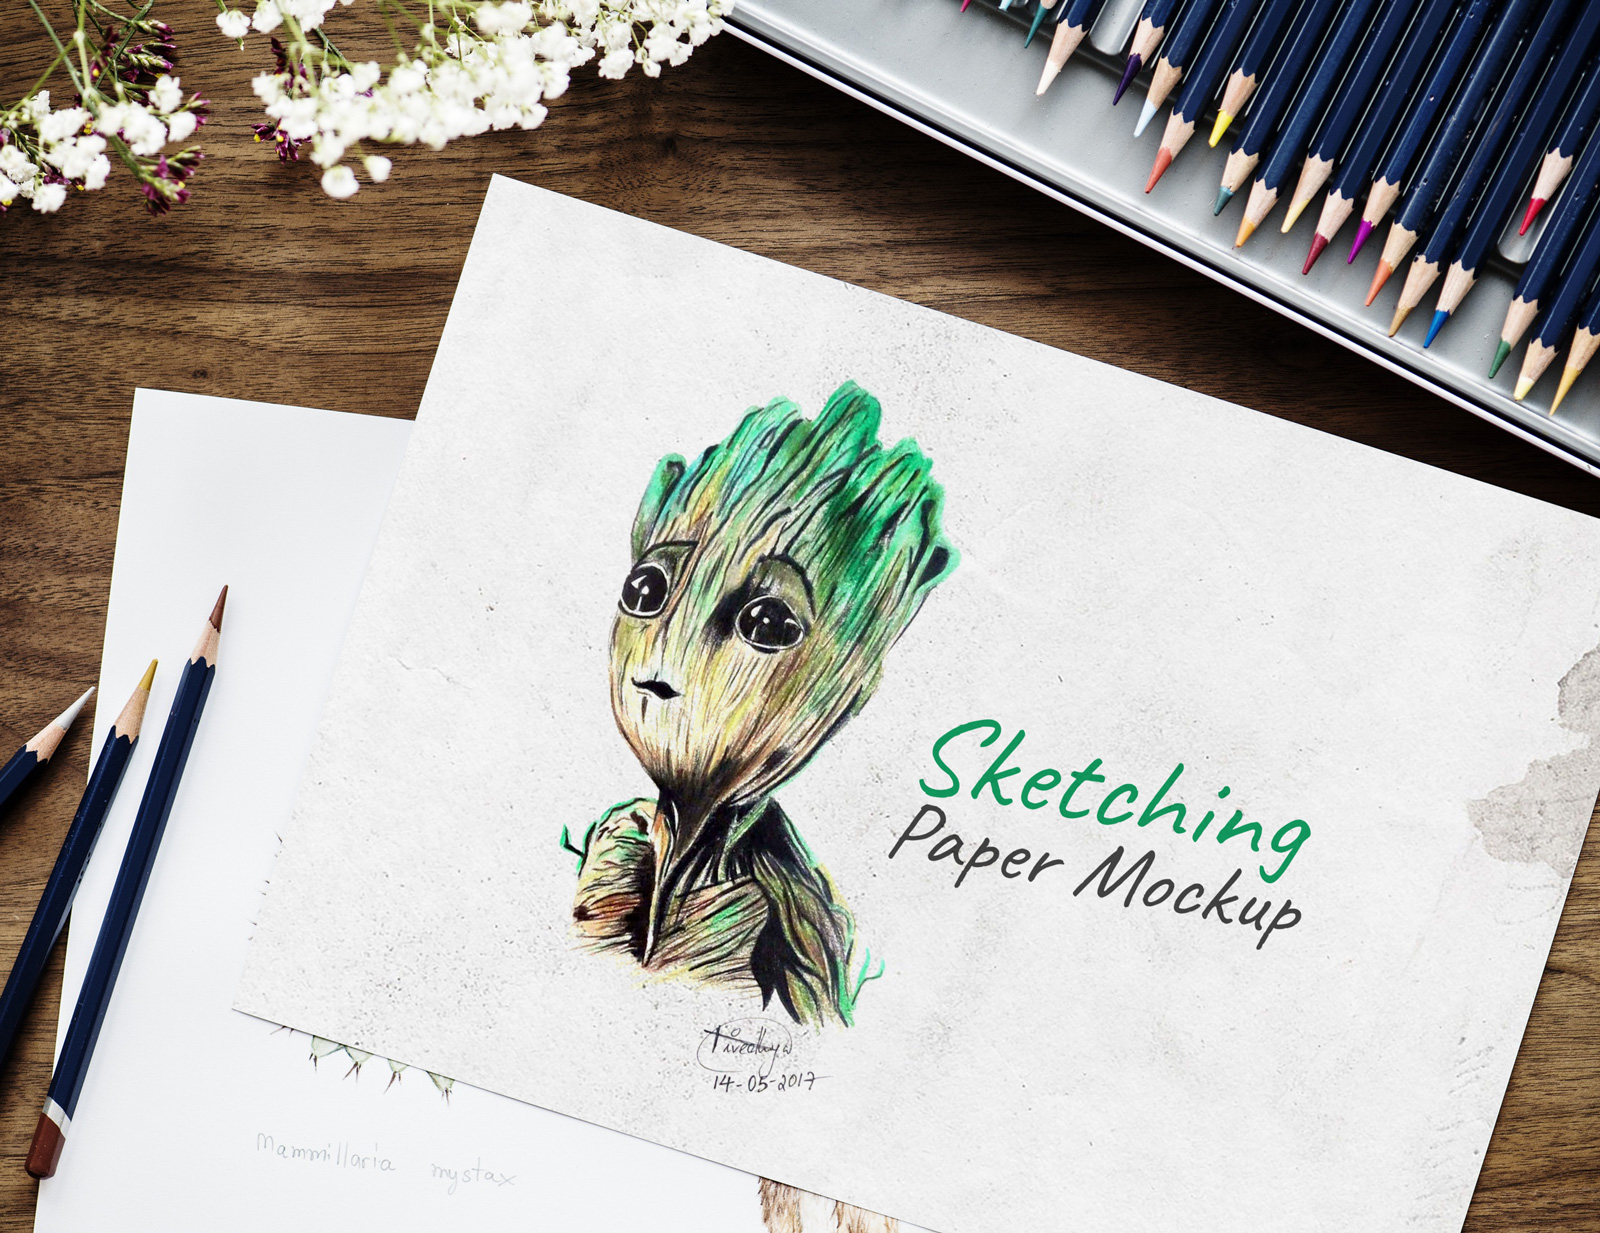 Download Free Sketching / Drawing Paper Mockup PSD | Designbolts